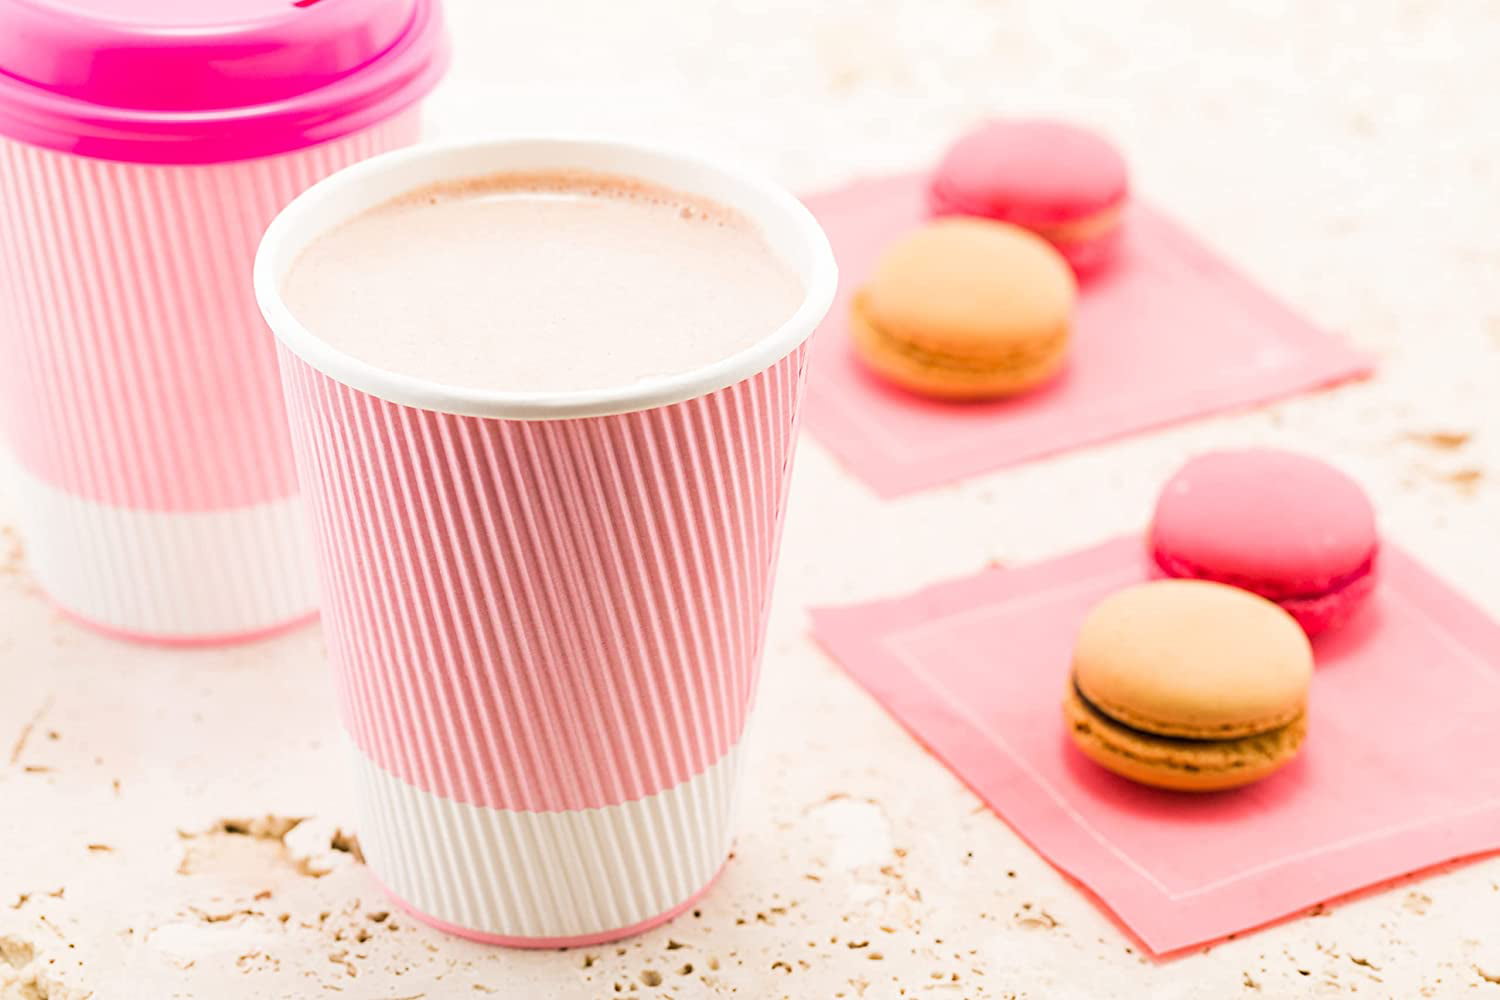 Insulated Paper Coffee Cups - Ripple Wall - Light Pink - 16 oz - 500ct Box - Matching Lids Sold separately: RWA0360B, RWA0360W, RWA0328LG, RWA0328GR